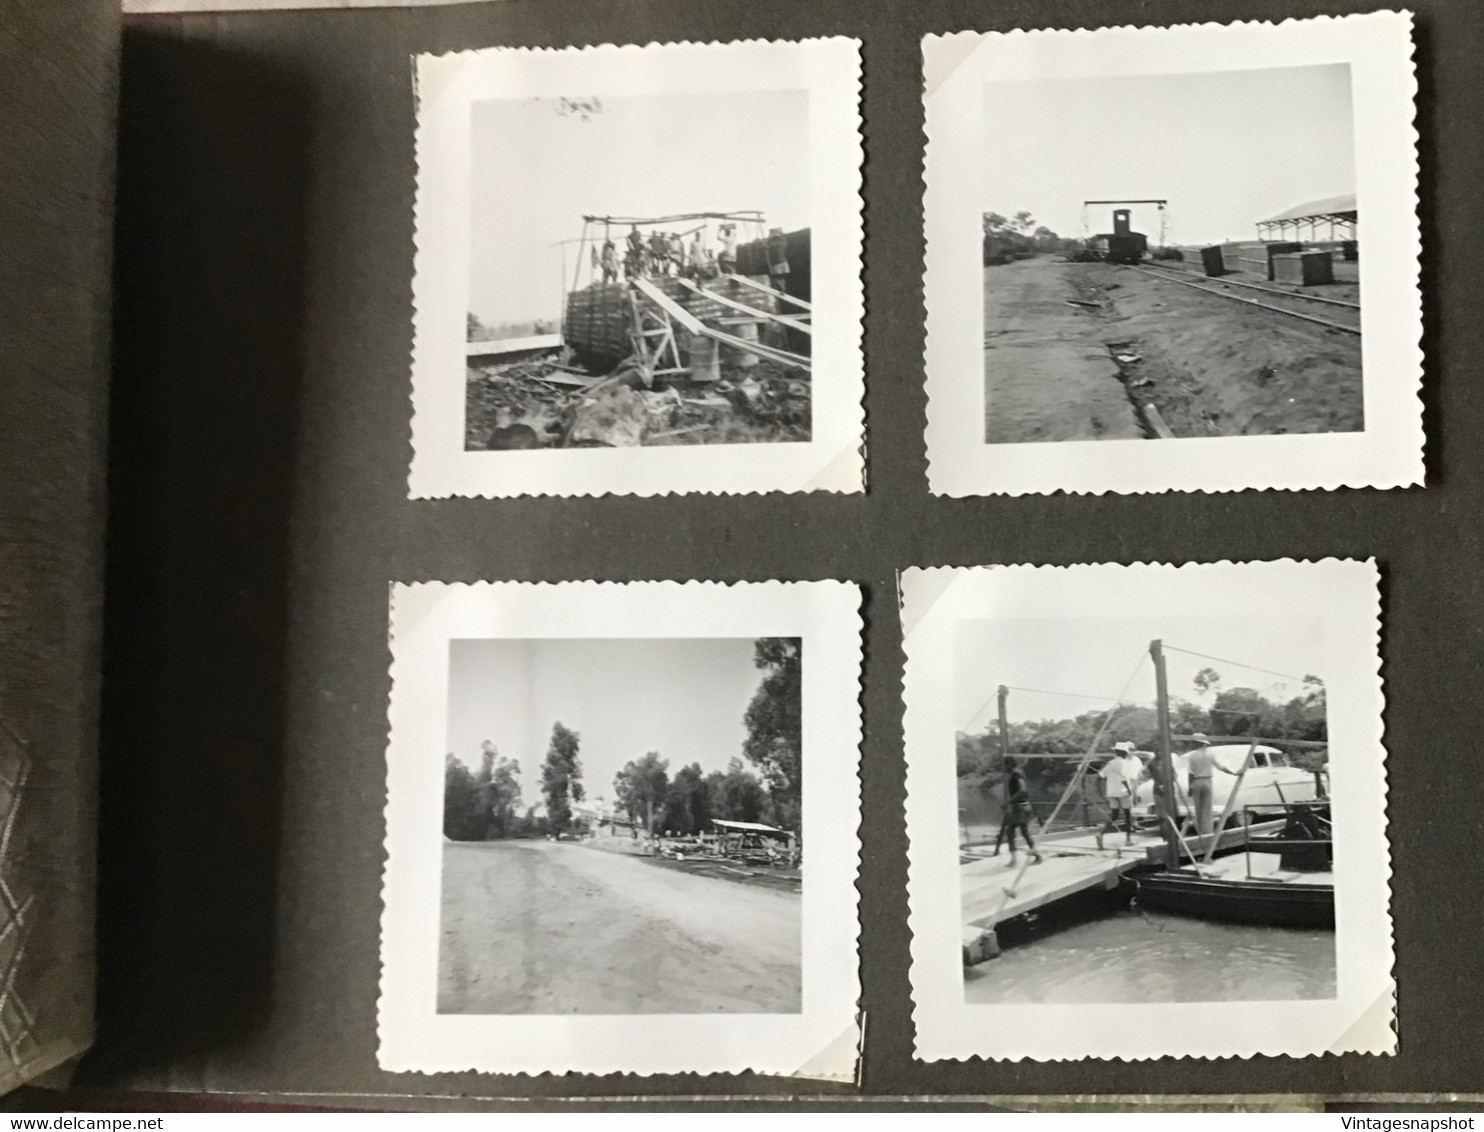 Congo Belge Sud Kivu Kalambo & région Album de 144 Snapshots vers 1940-1950